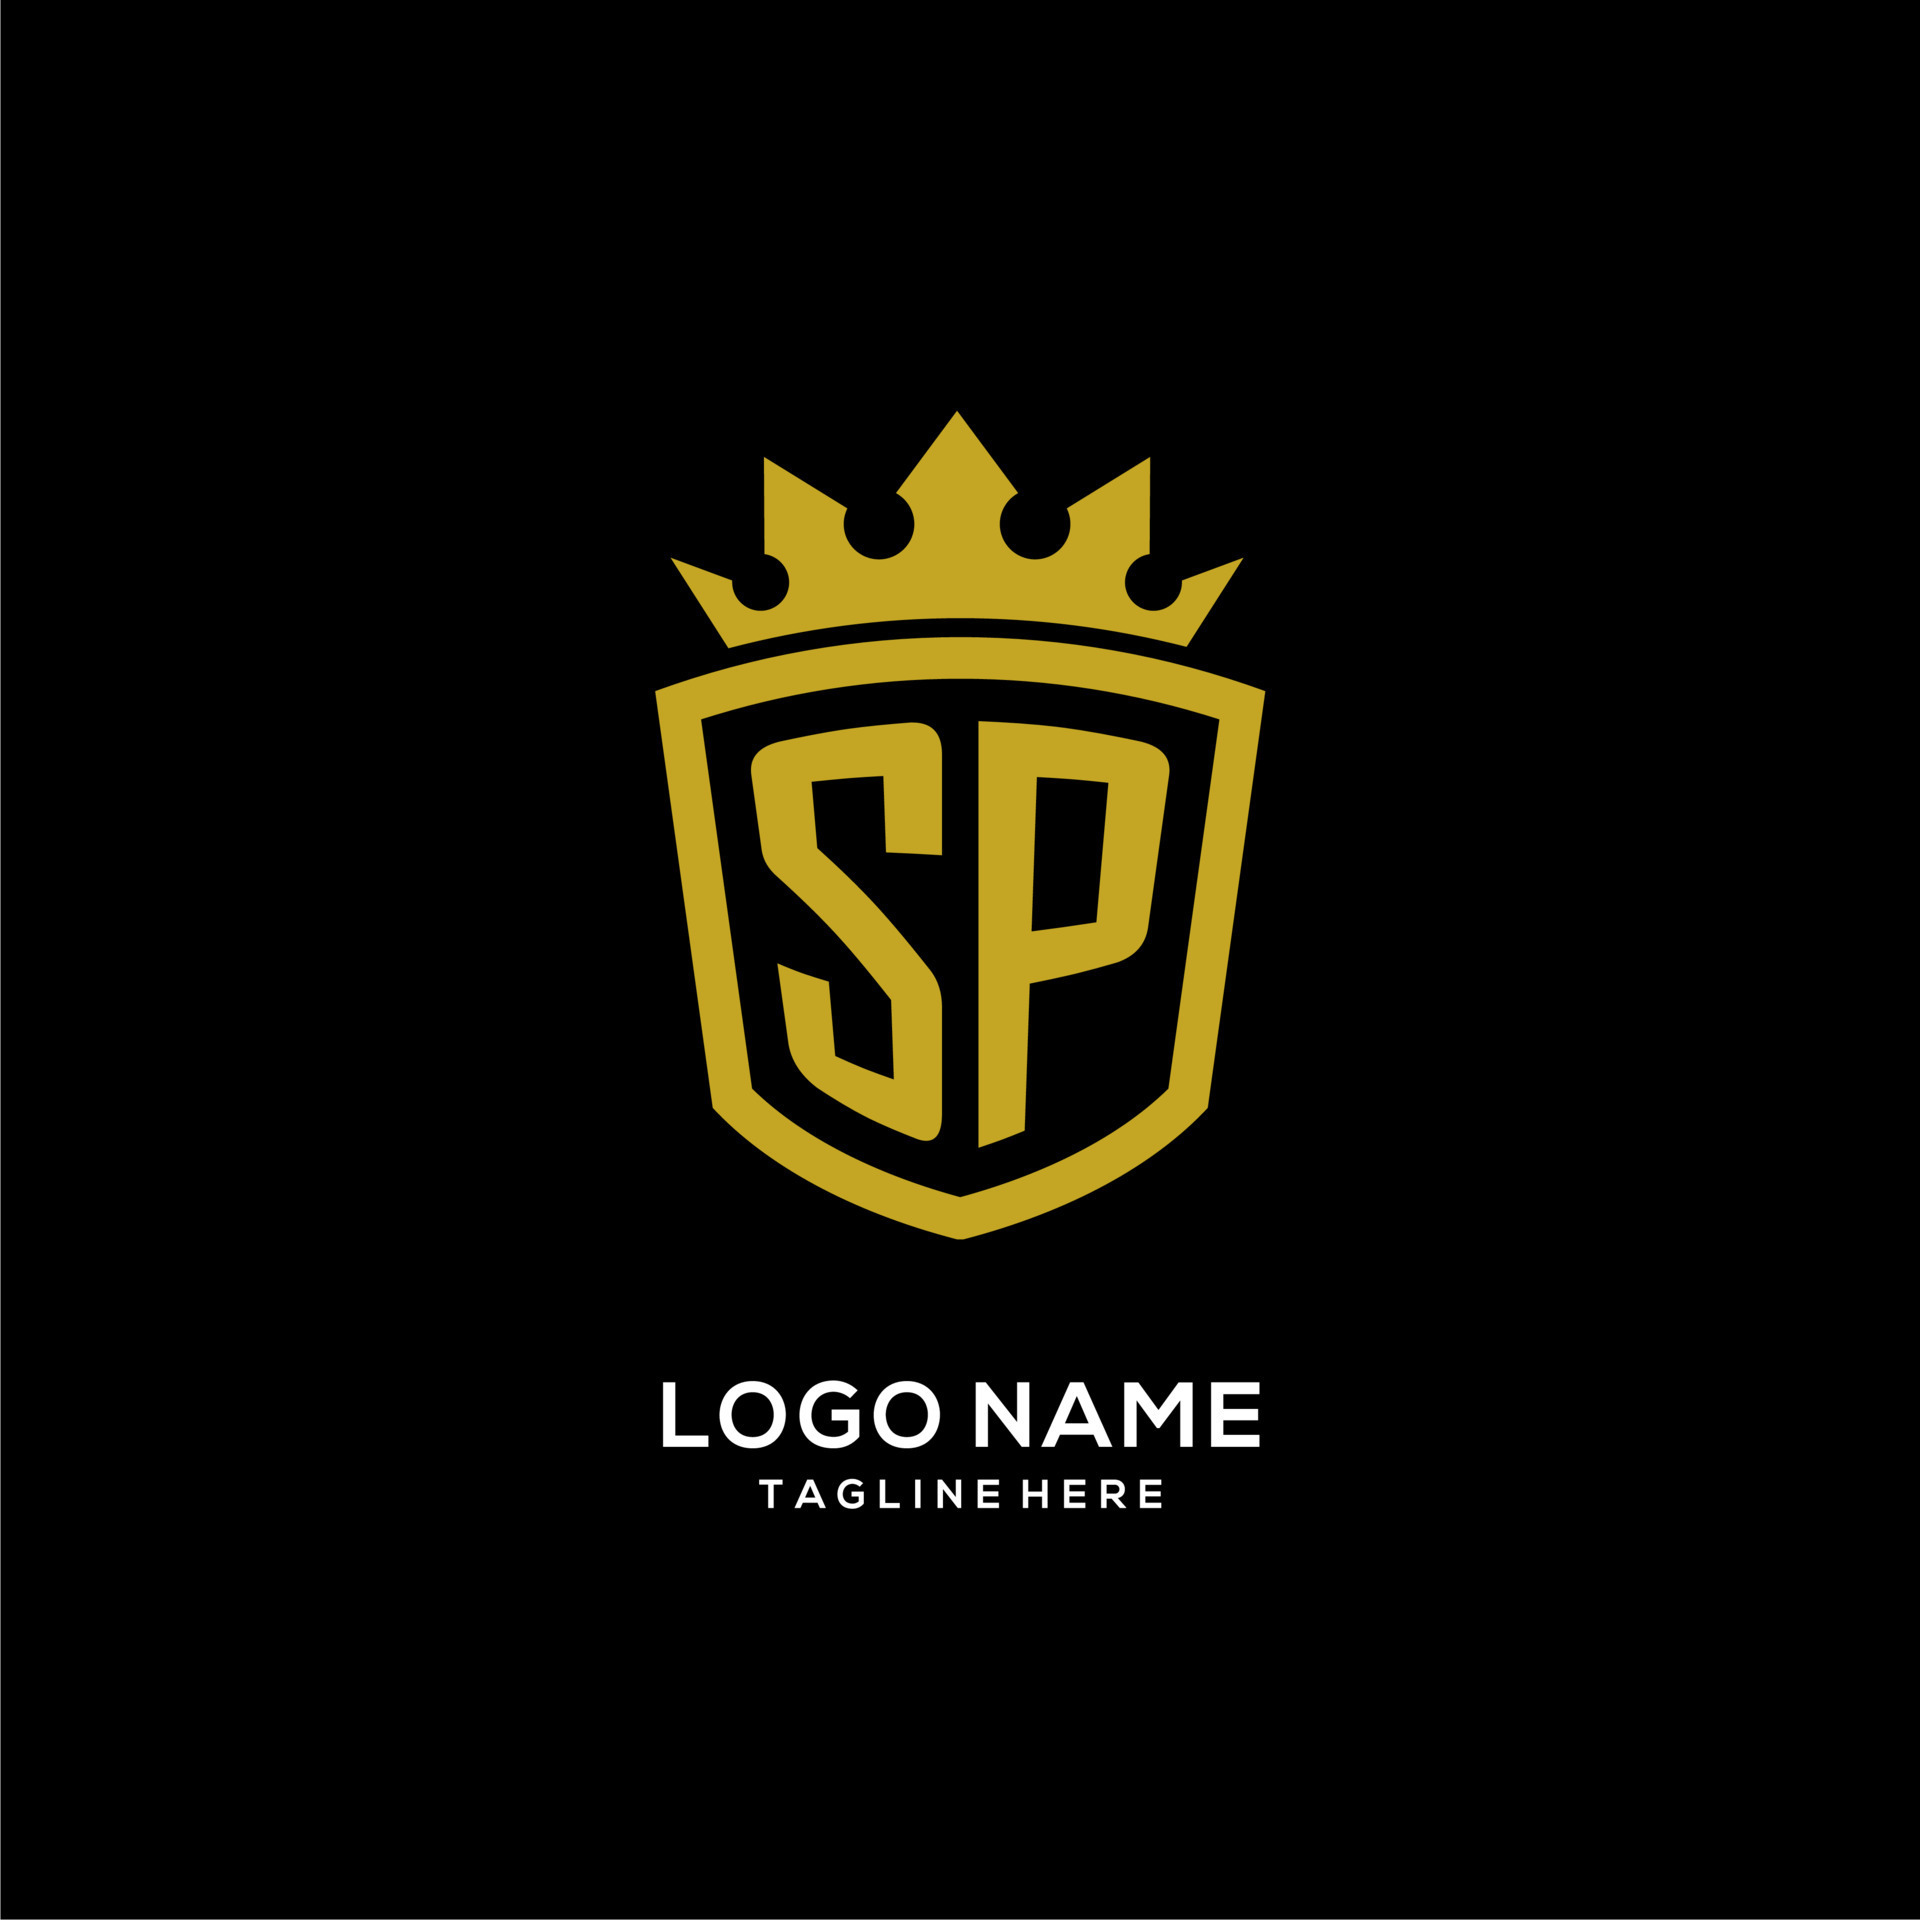 100,000 Sp logo Vector Images | Depositphotos